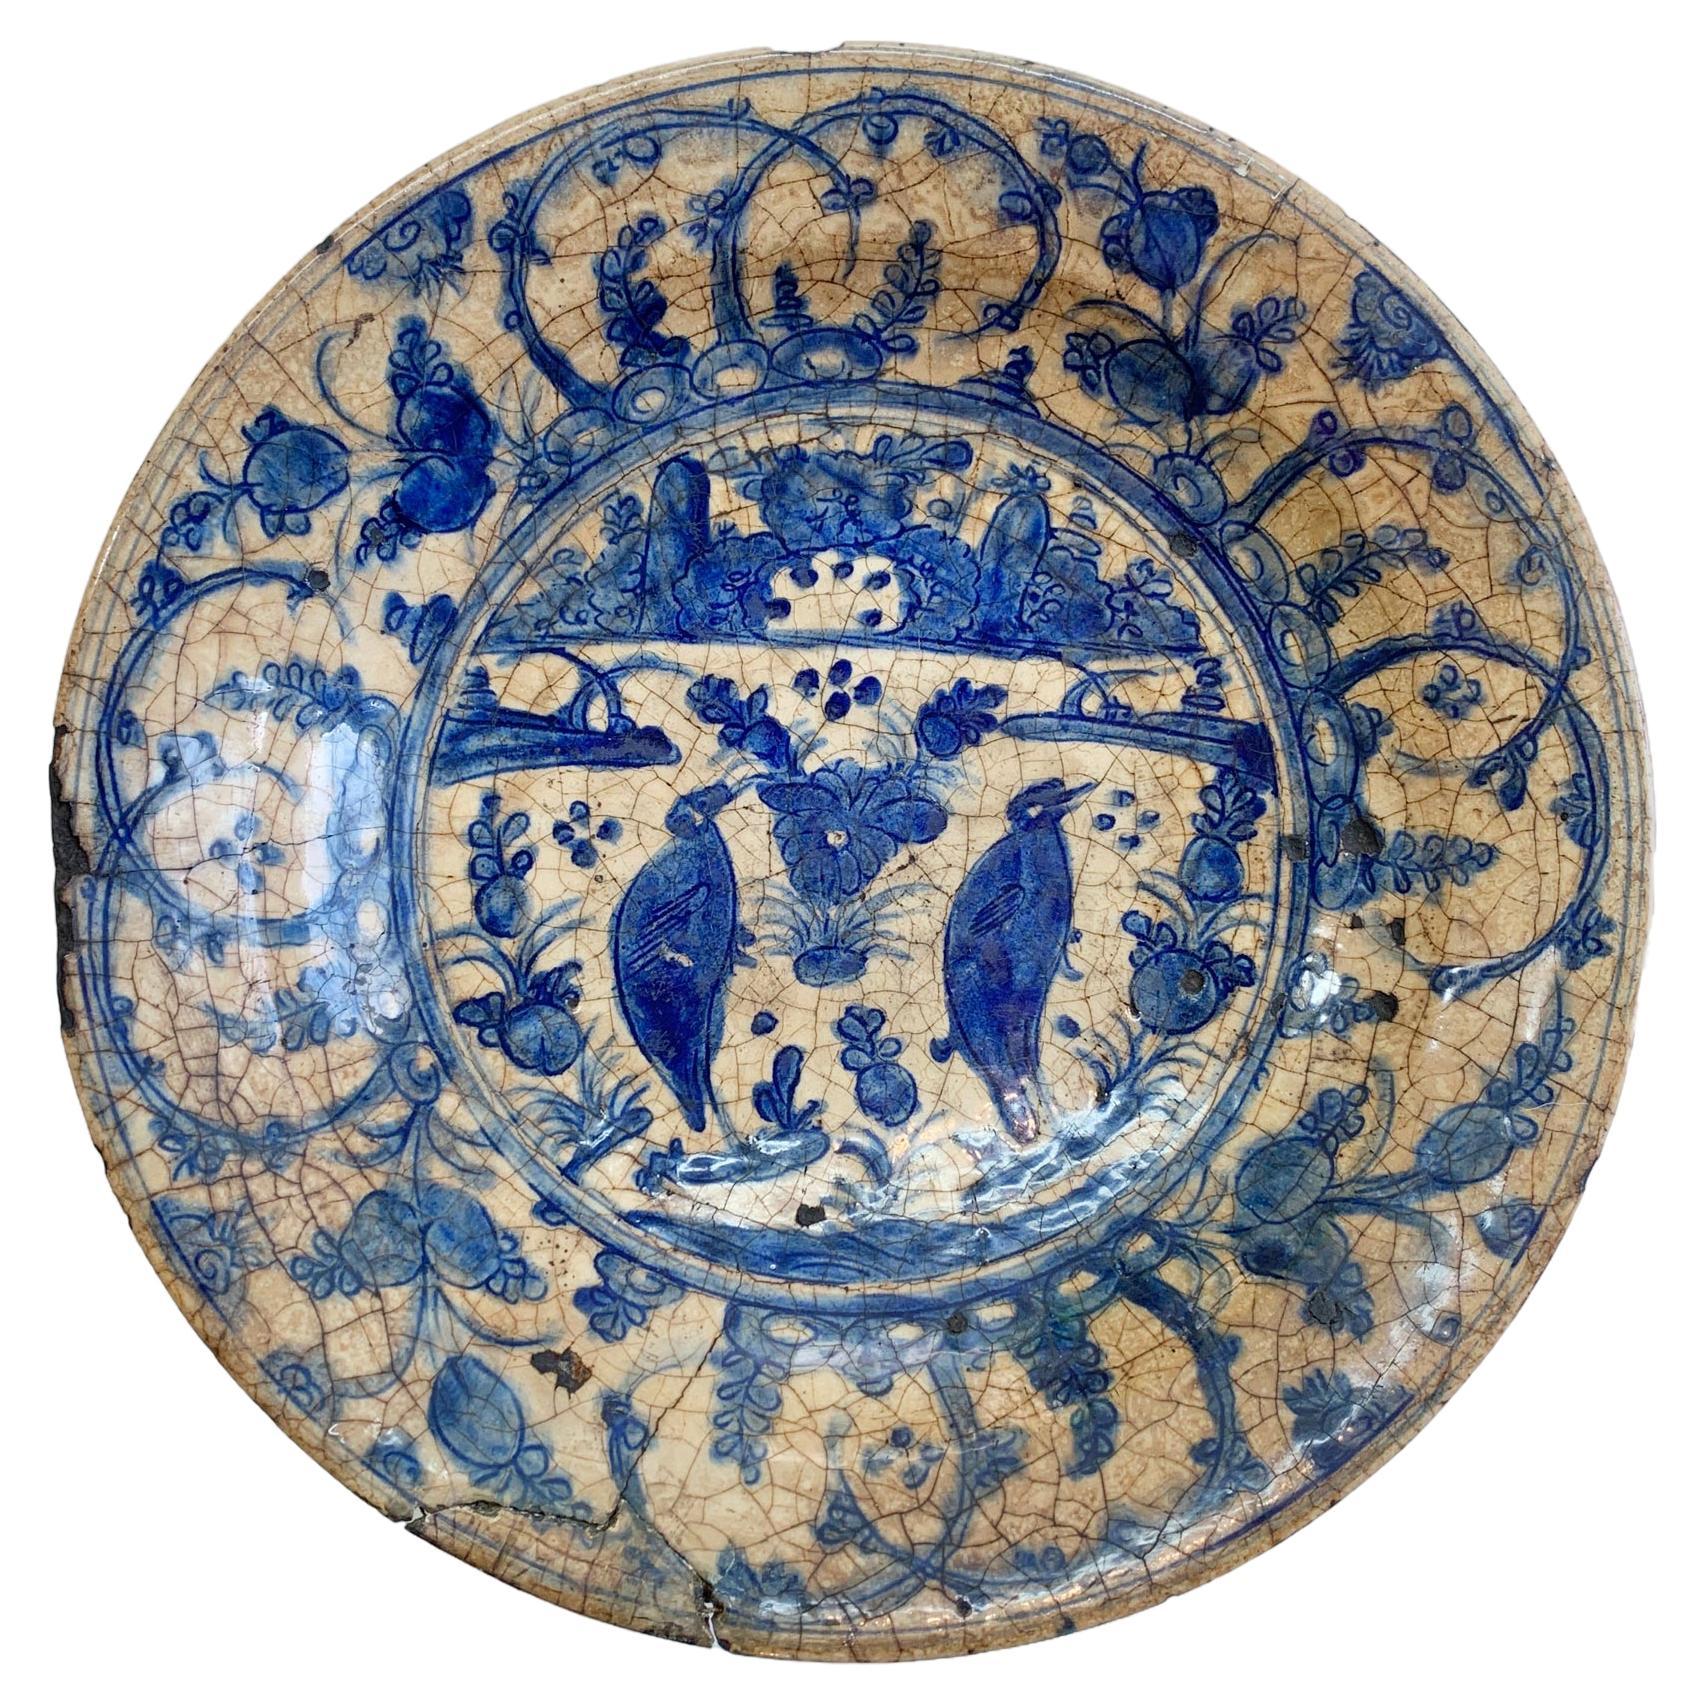 Safawiden-Keramikschale aus dem 16.